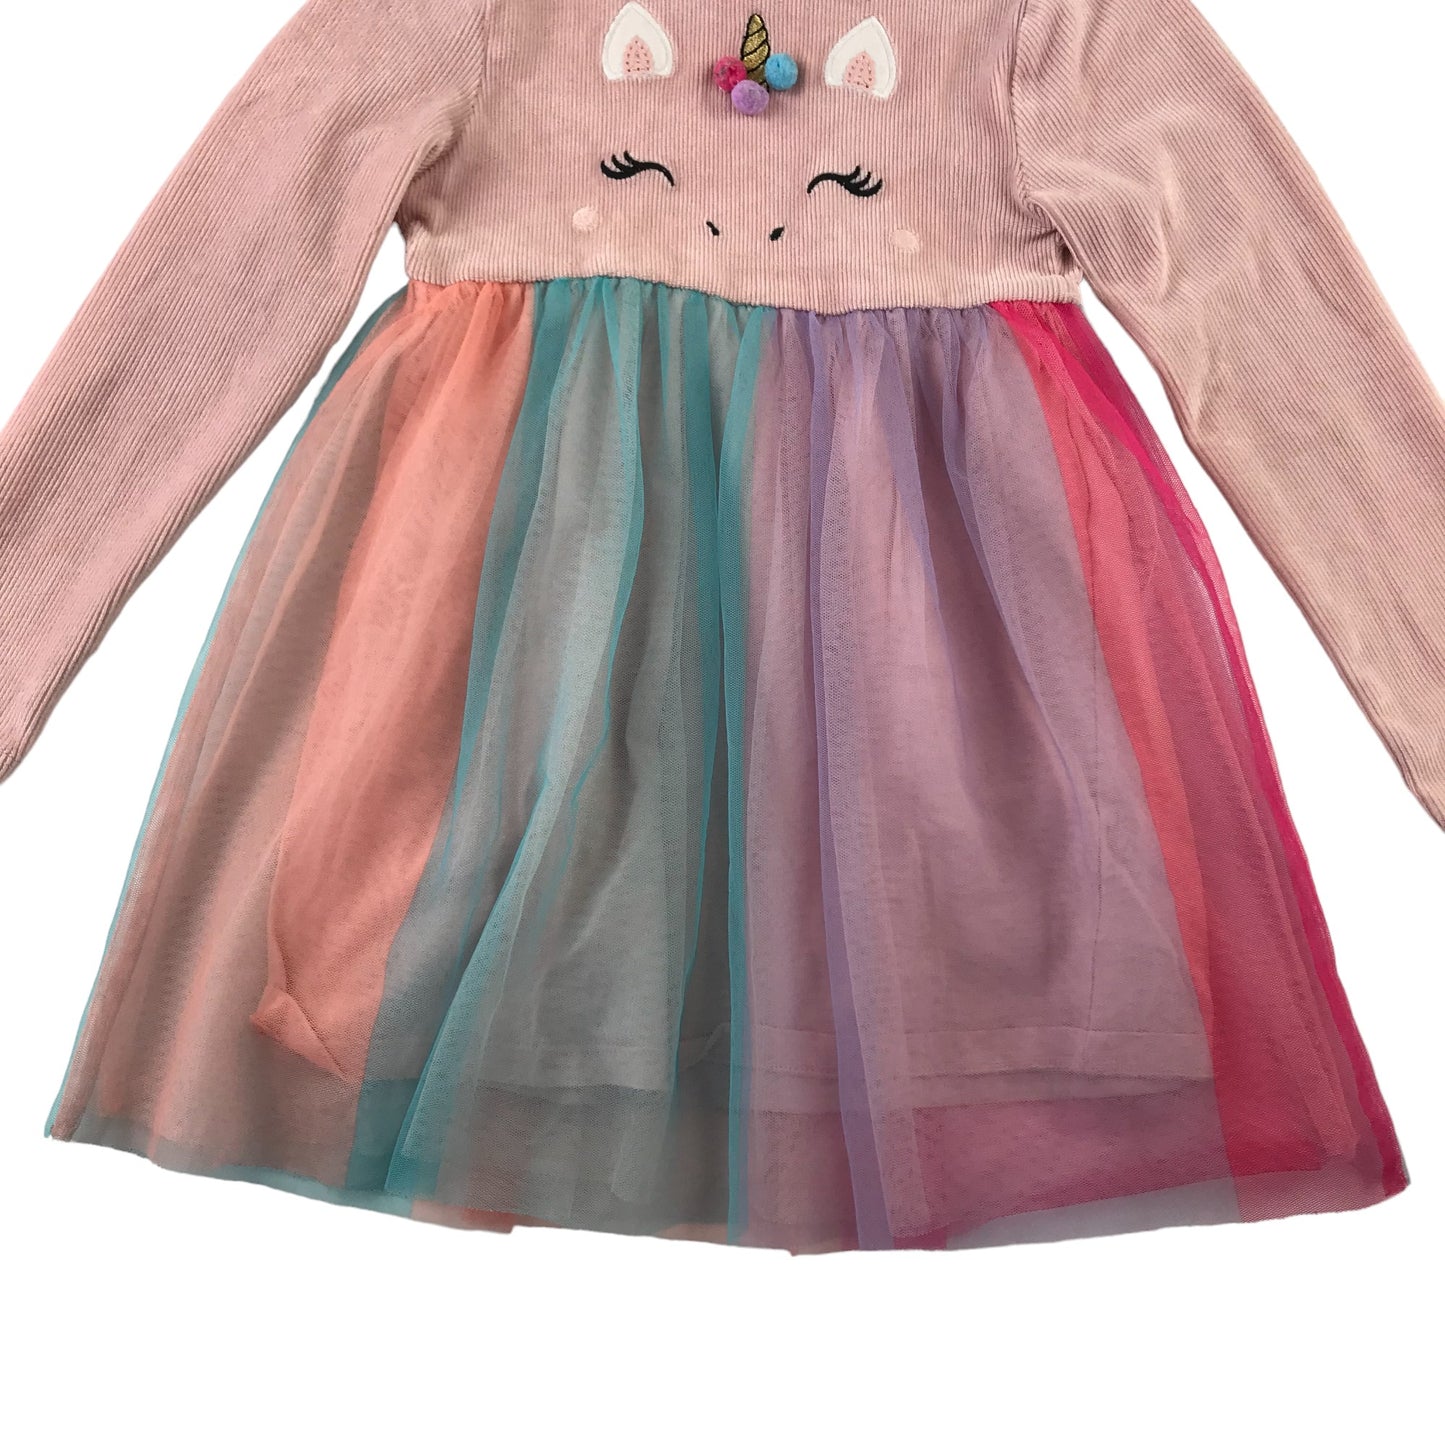 F&F dress 4-5 years pink unicorn pastel tulle skirt